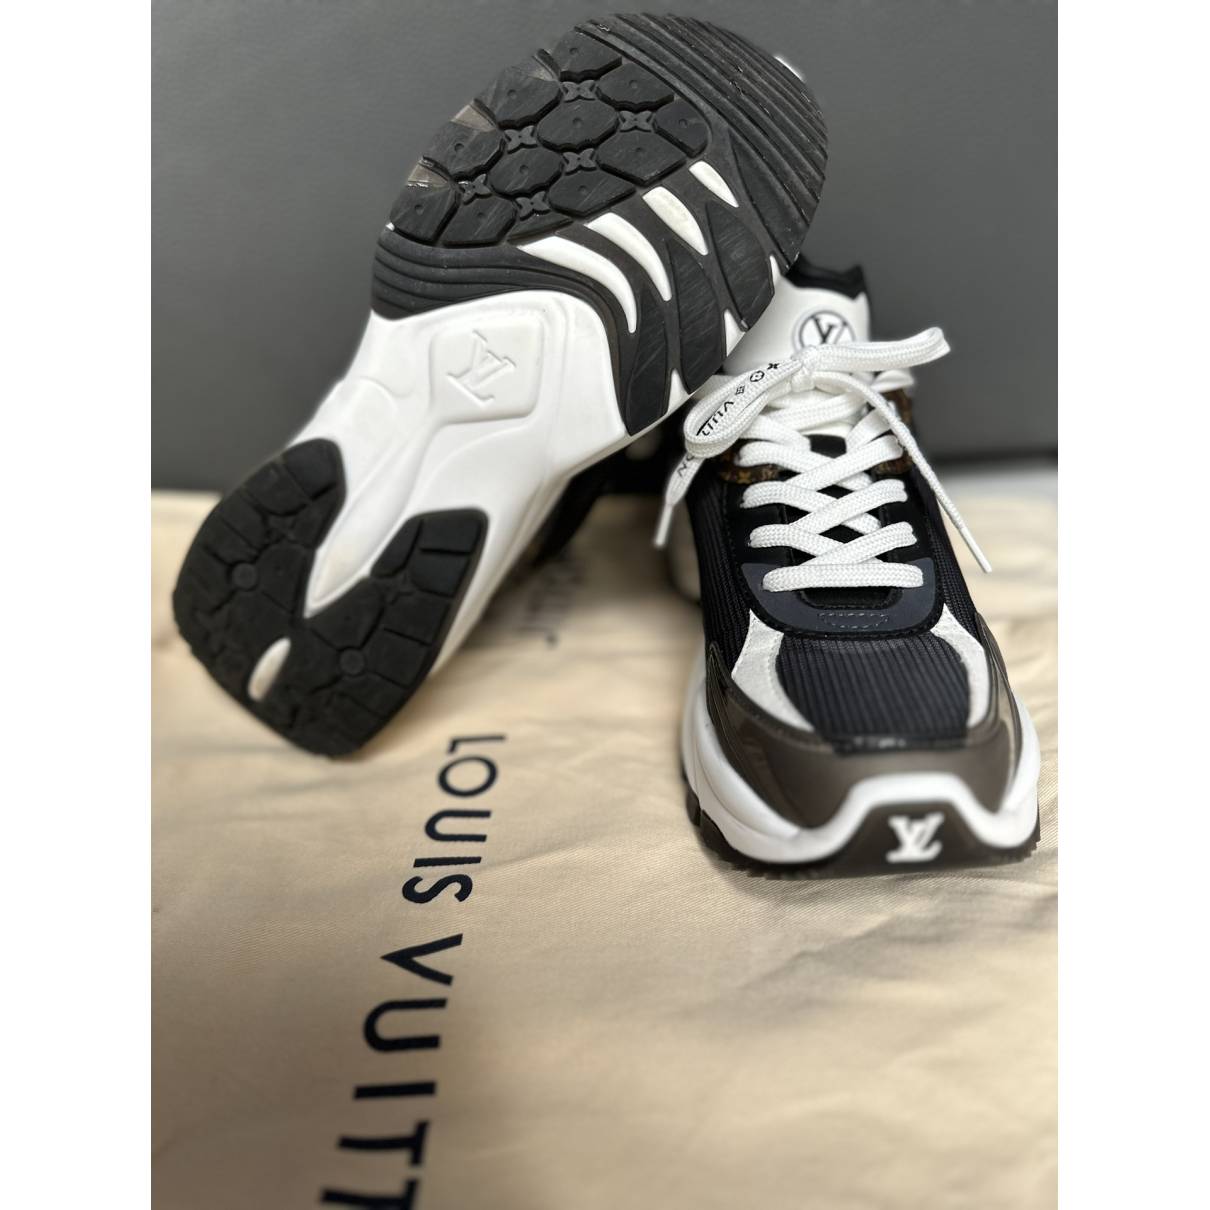 Louis Vuitton Run 55 Sneaker Gold. Size 37.0